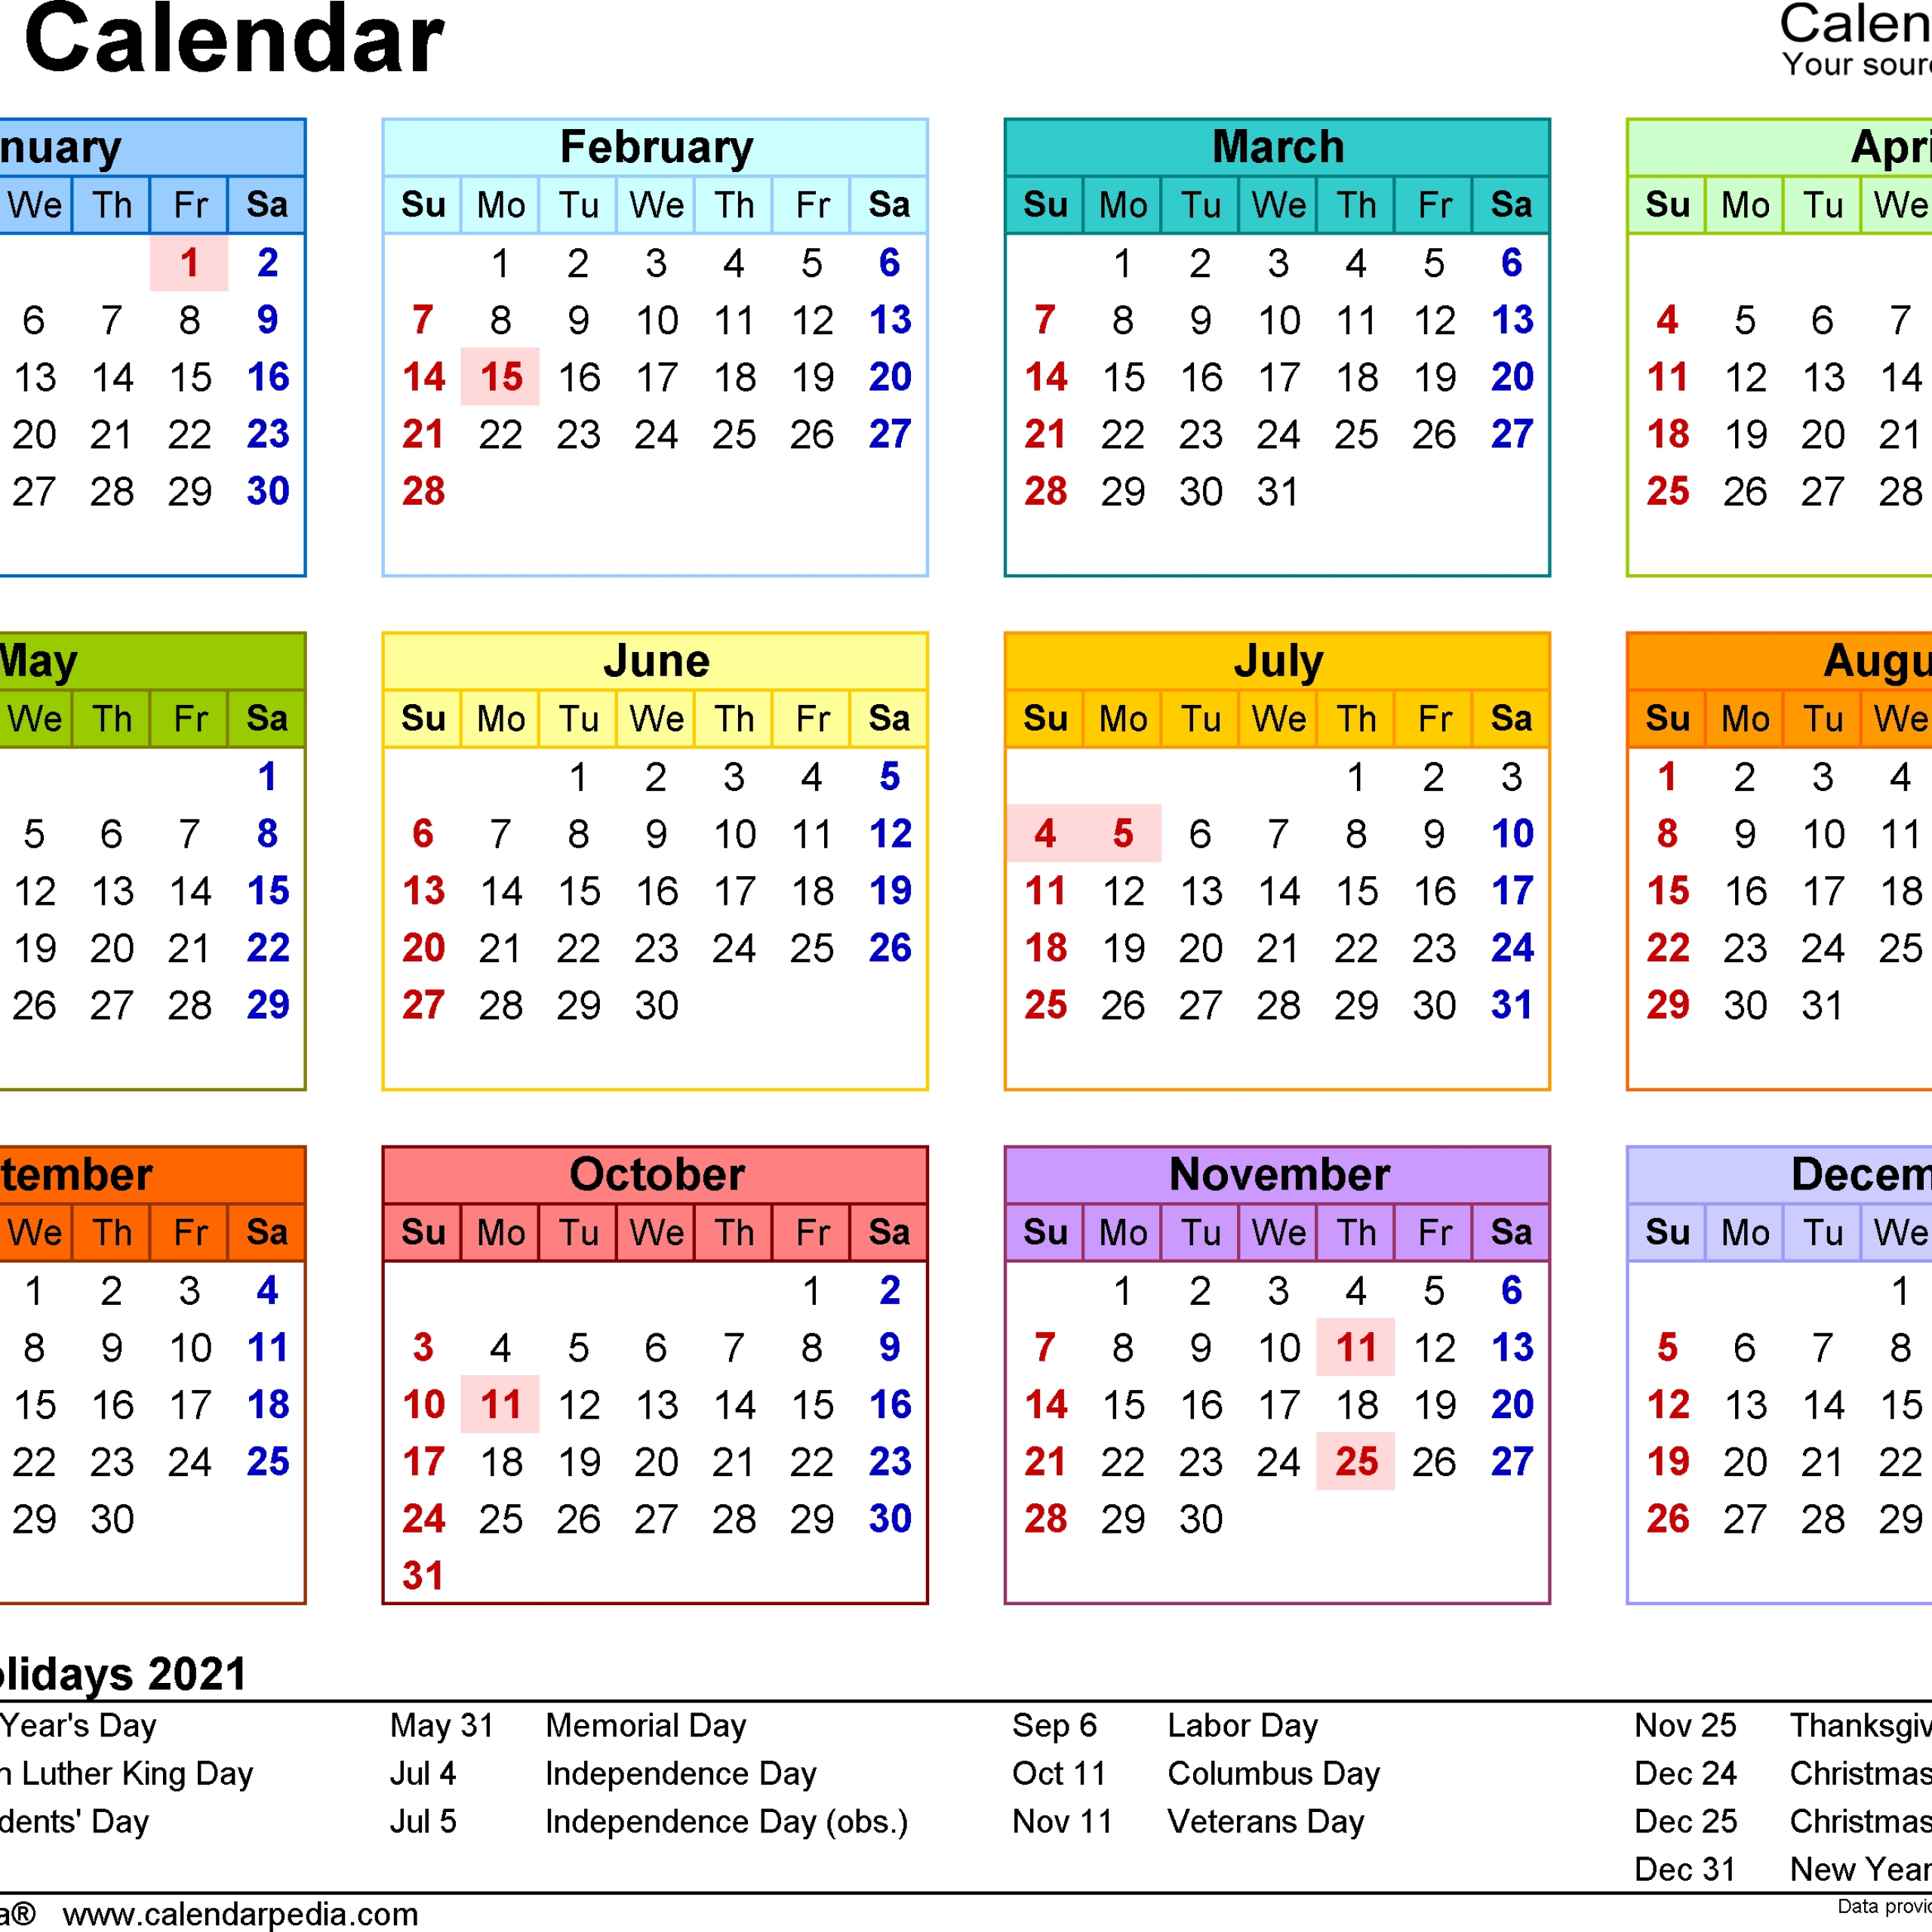 20+ 2021 Holidays Calendar - Free Download Printable-May Calendar 2021 Sri Lanka